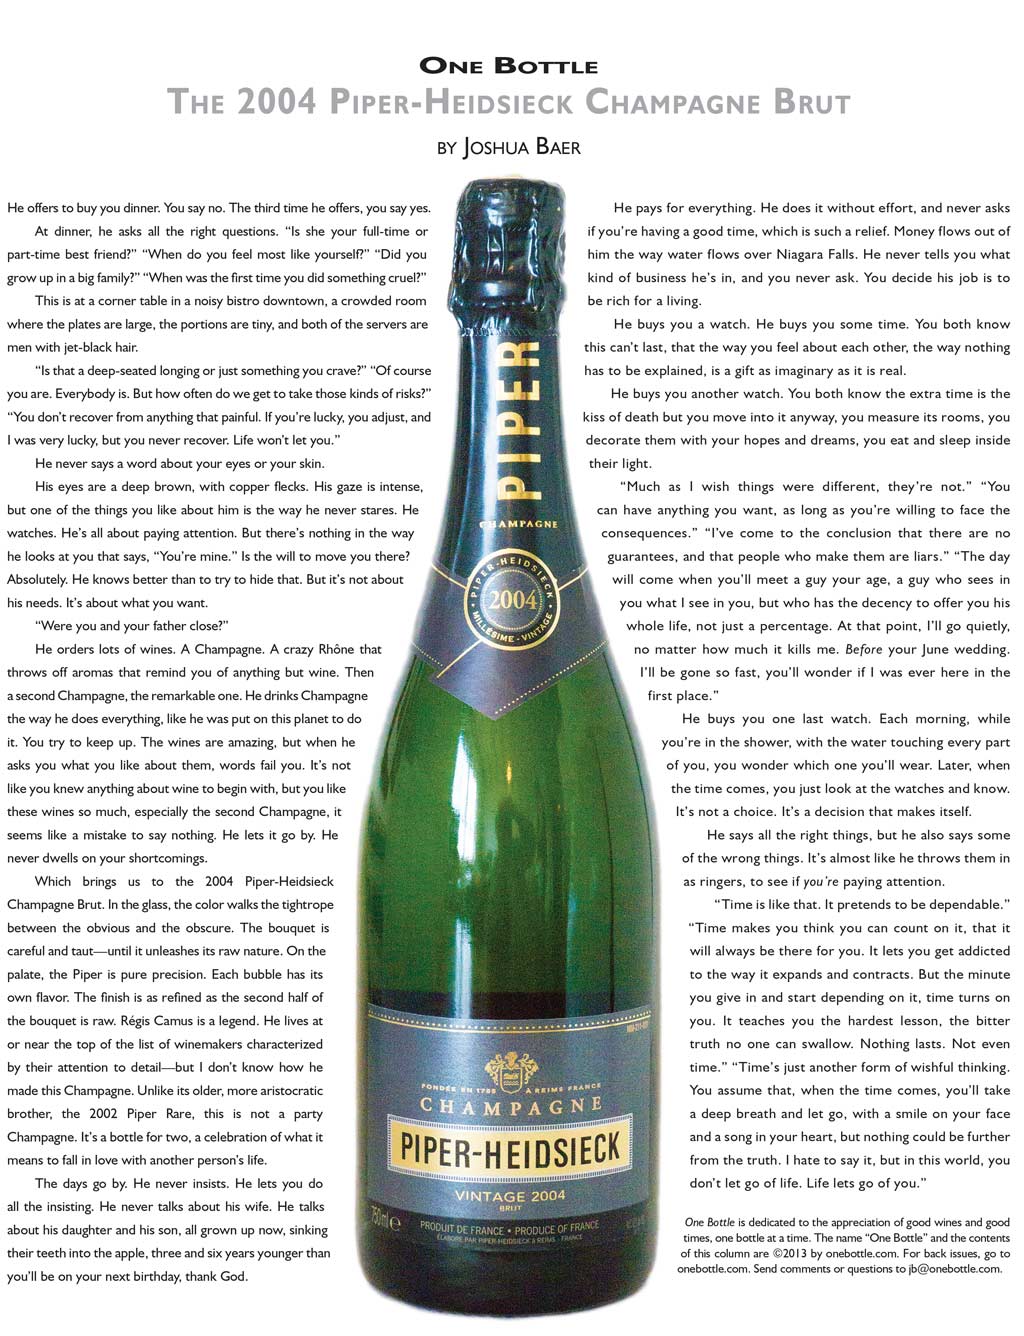 2004 Piper-Heidsieck Champagne Brut